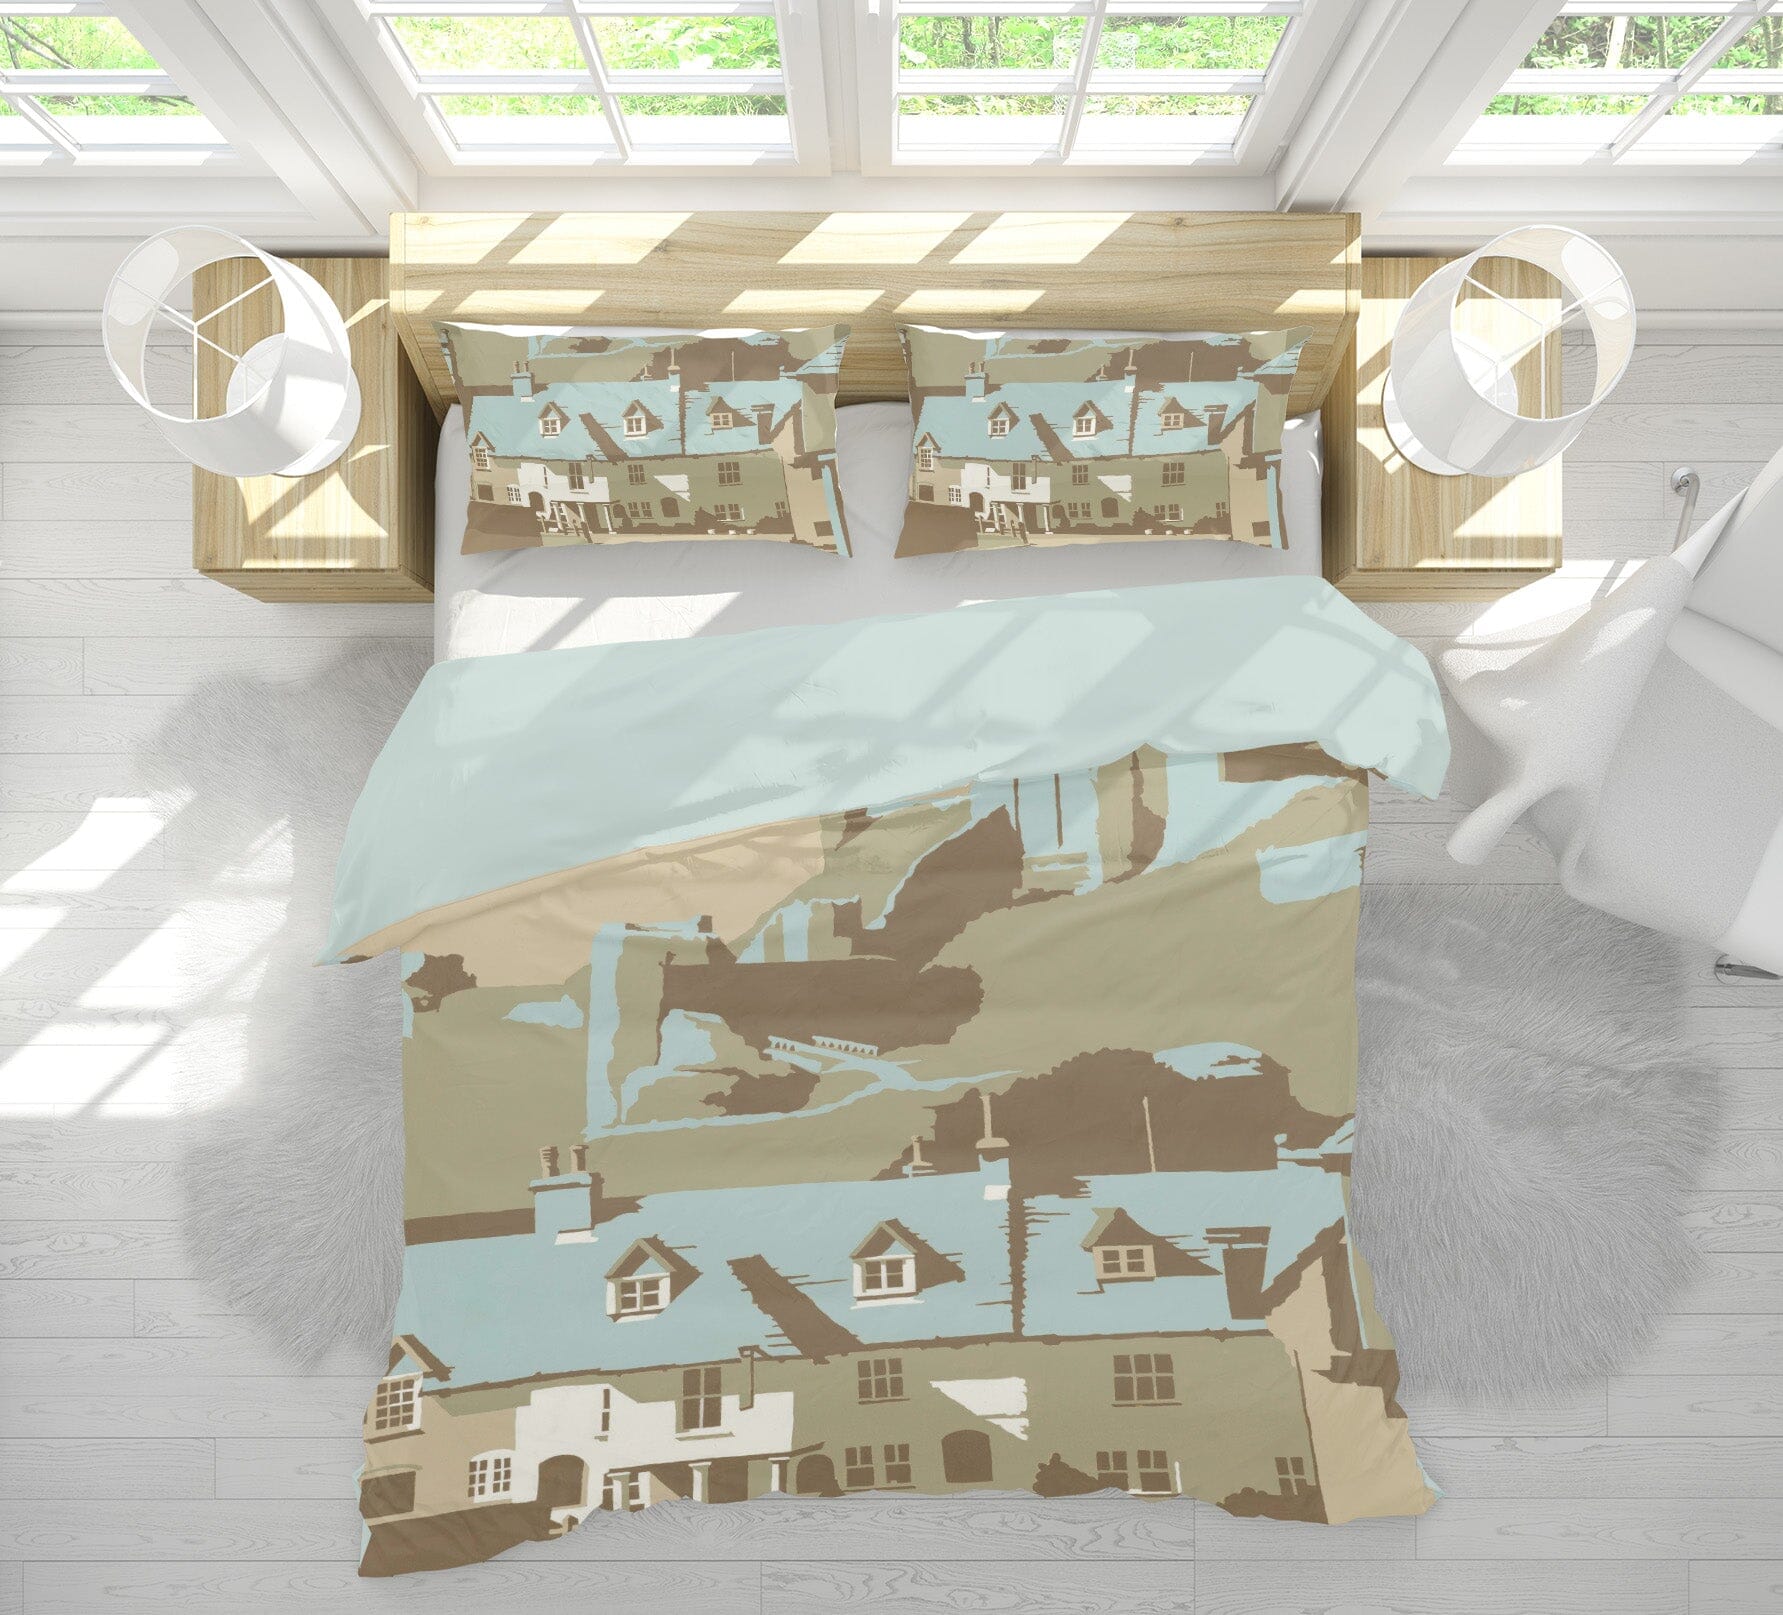 3D Corfe Castle 2015 Steve Read Bedding Bed Pillowcases Quilt Quiet Covers AJ Creativity Home 